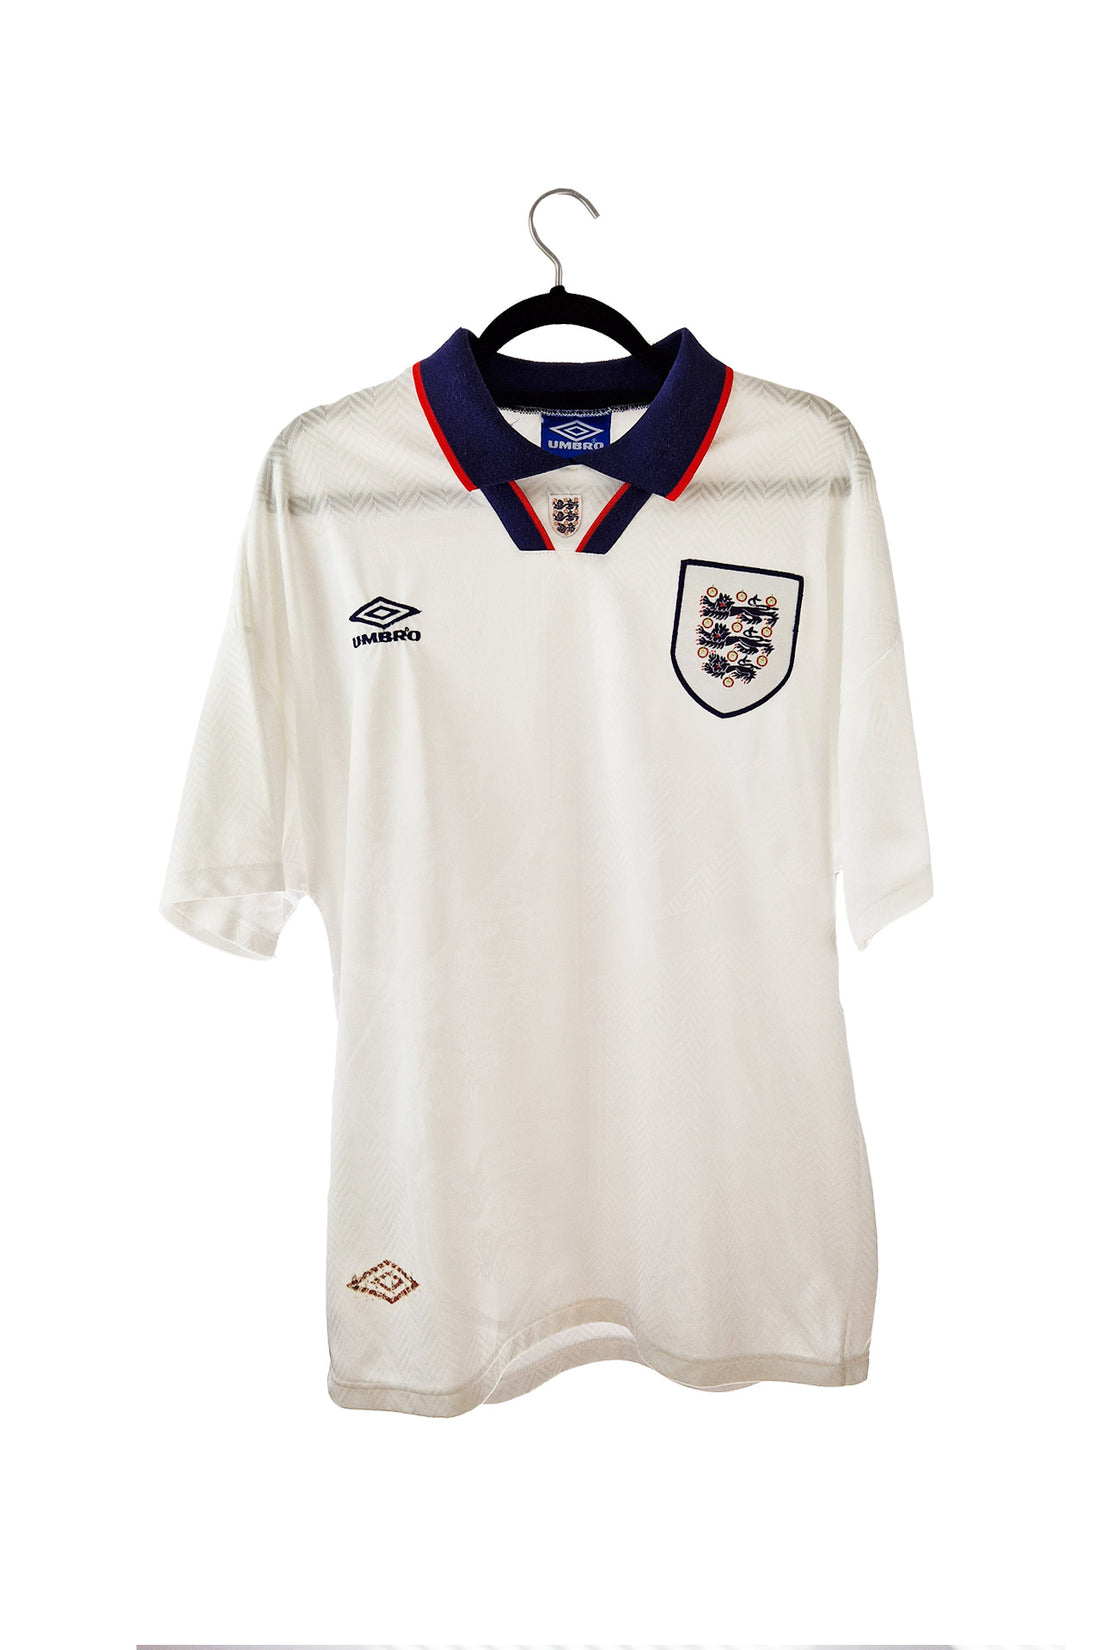 England 1993 - 1995 Home Football Shirt